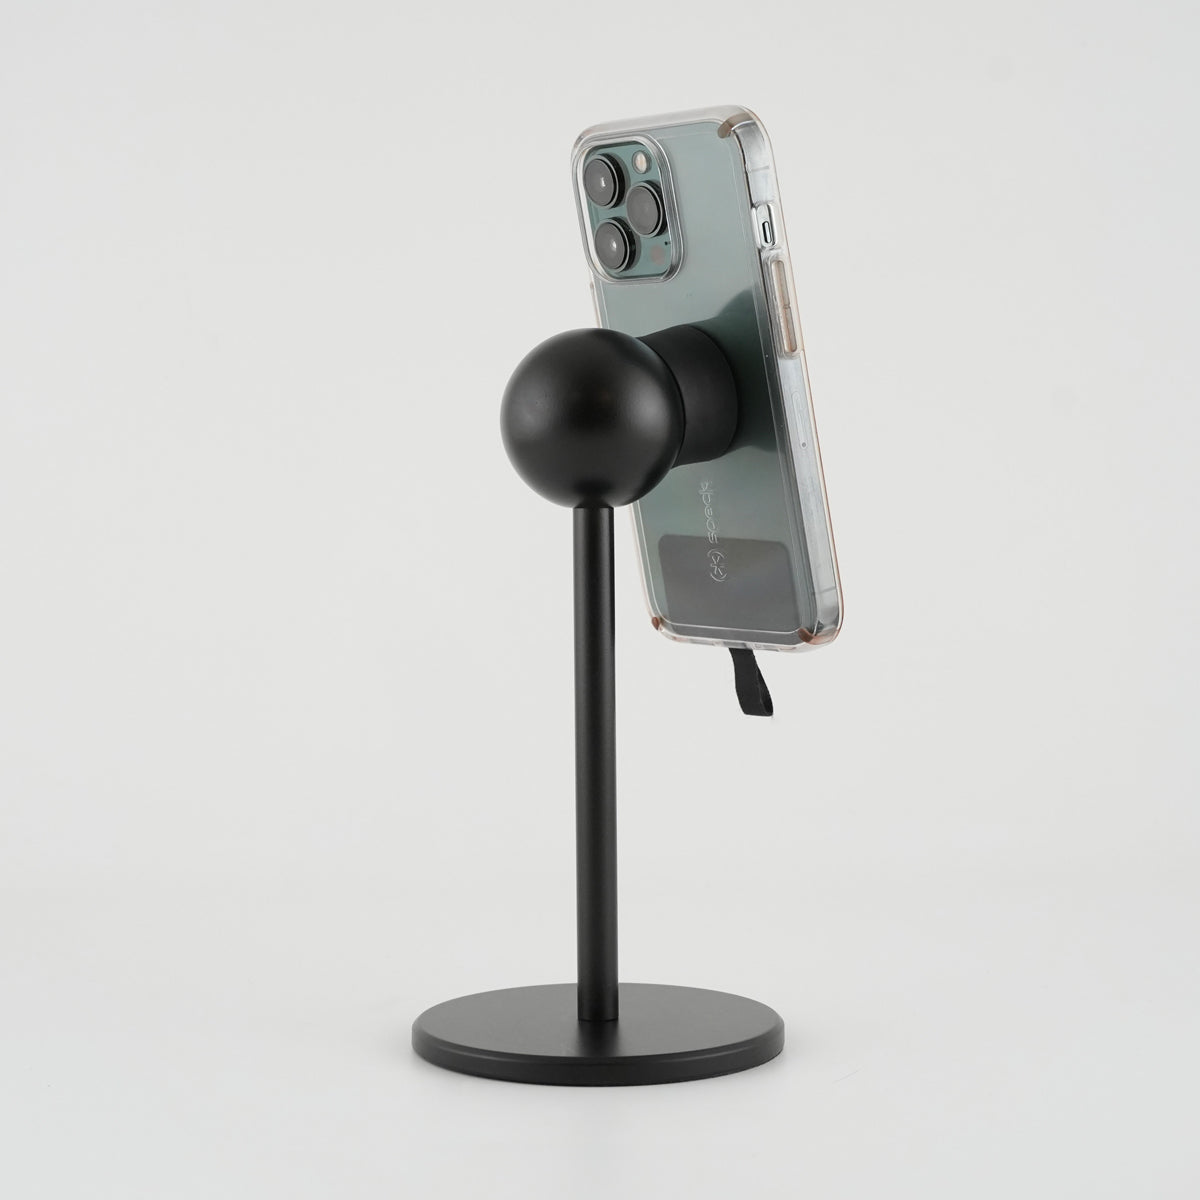 Black Satin iOMini Magnetic Phone Mount with Phone 